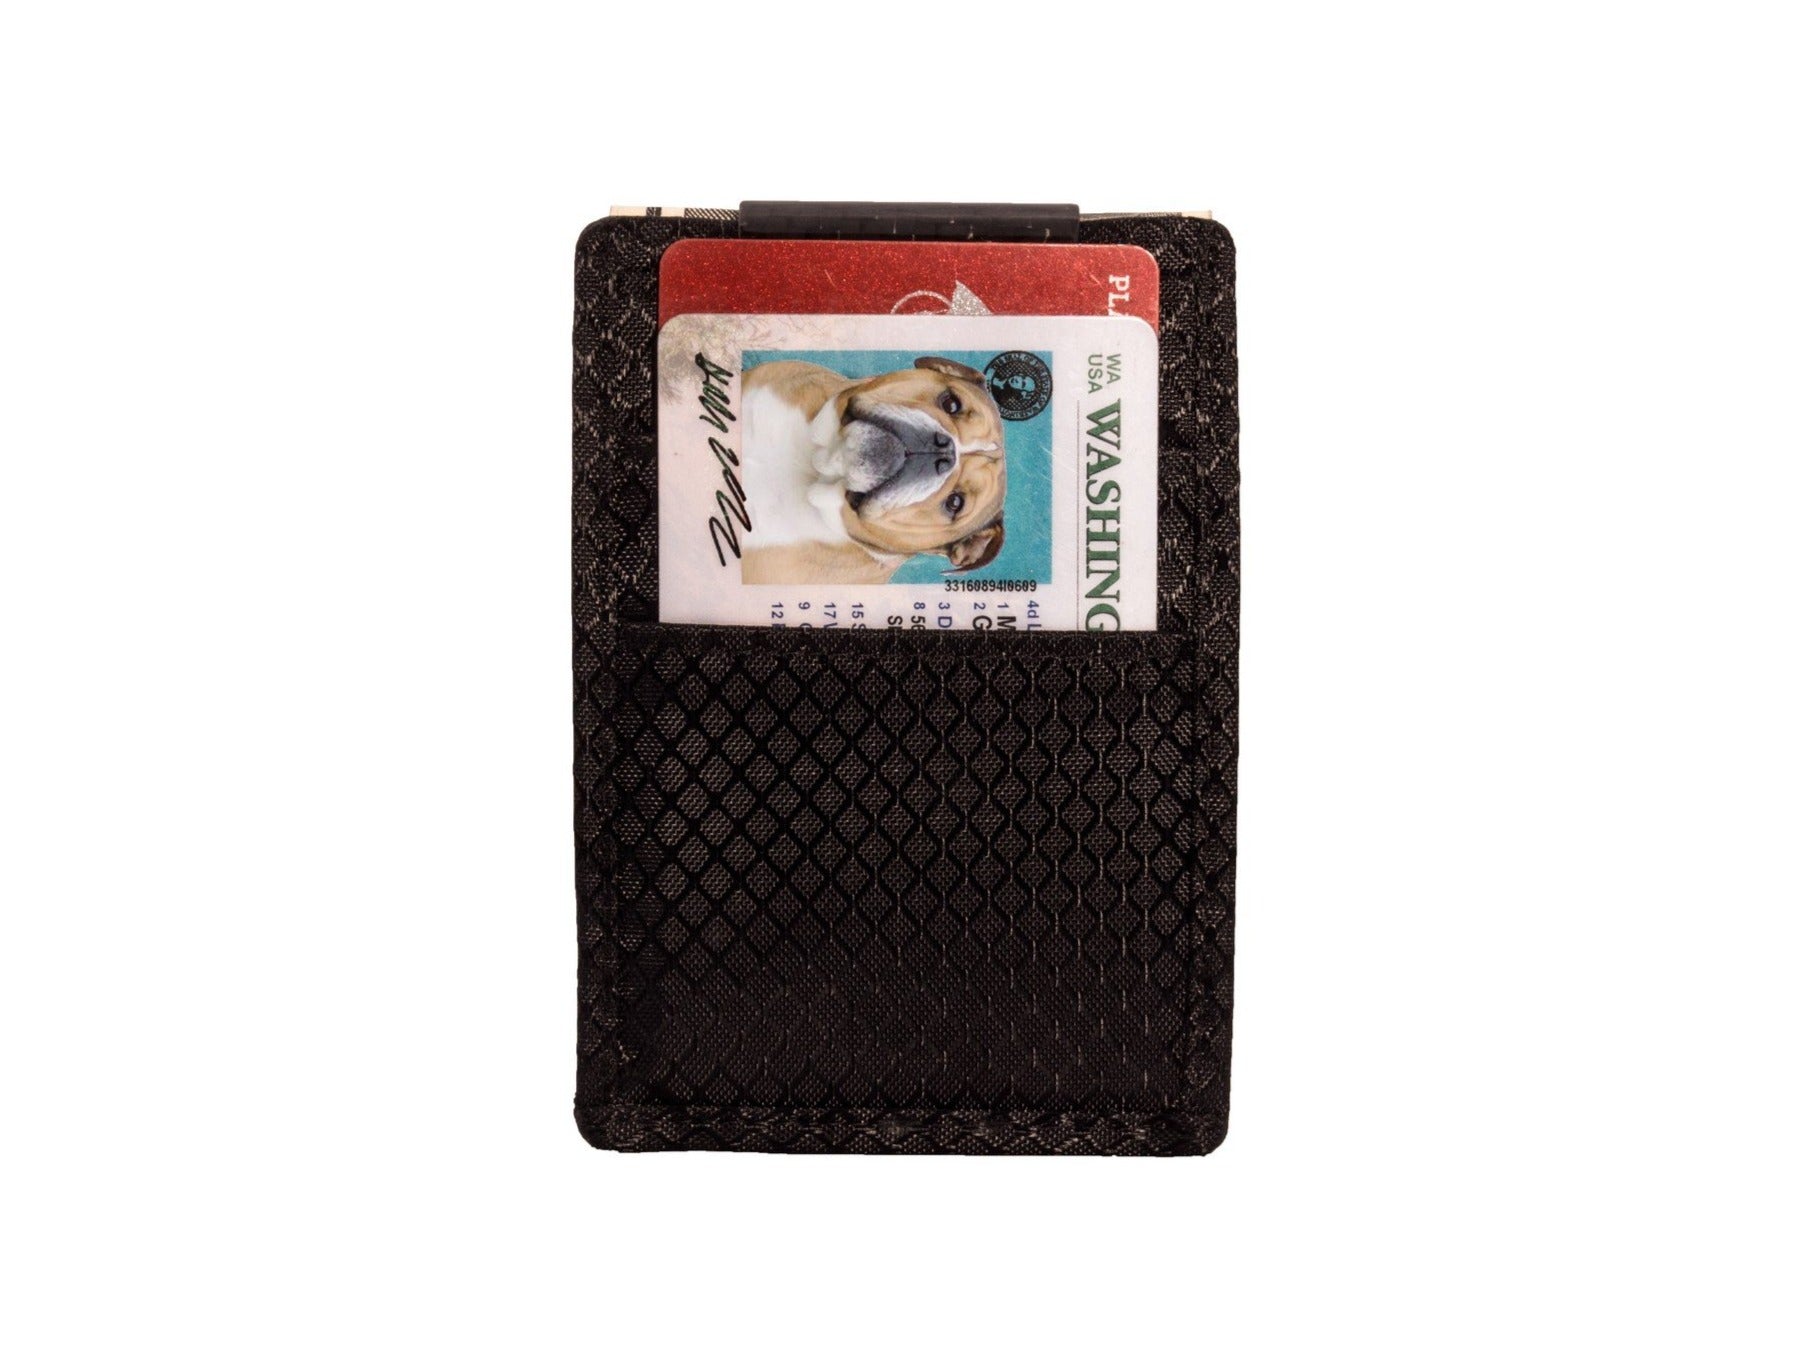 Carbon Fiber money clip wallet